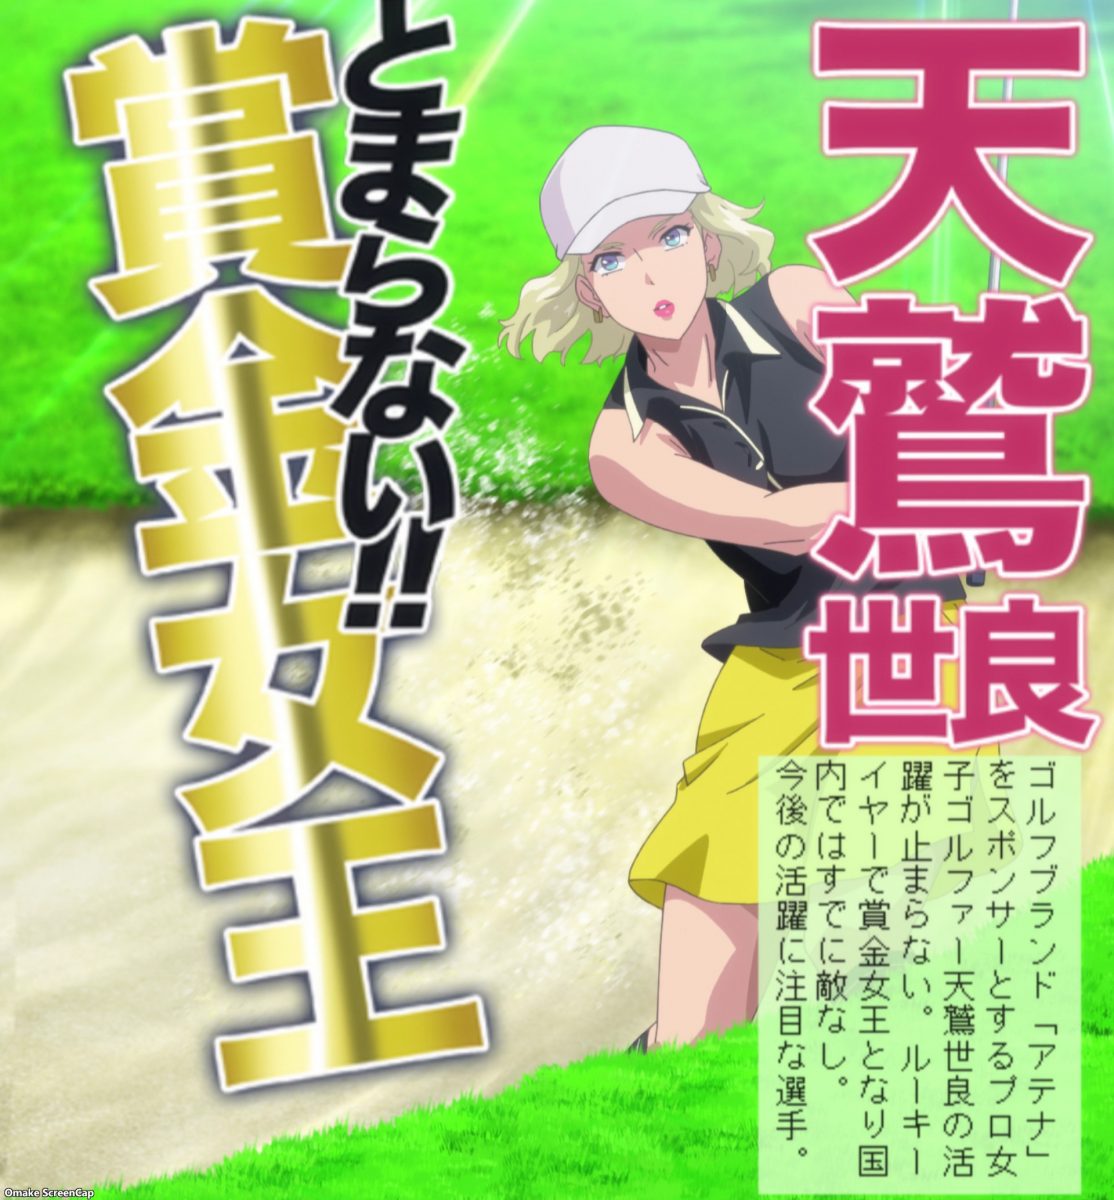 Birdie Wing Golf Girls' Story Episode 2 Seira Amawashi Pro Golfer